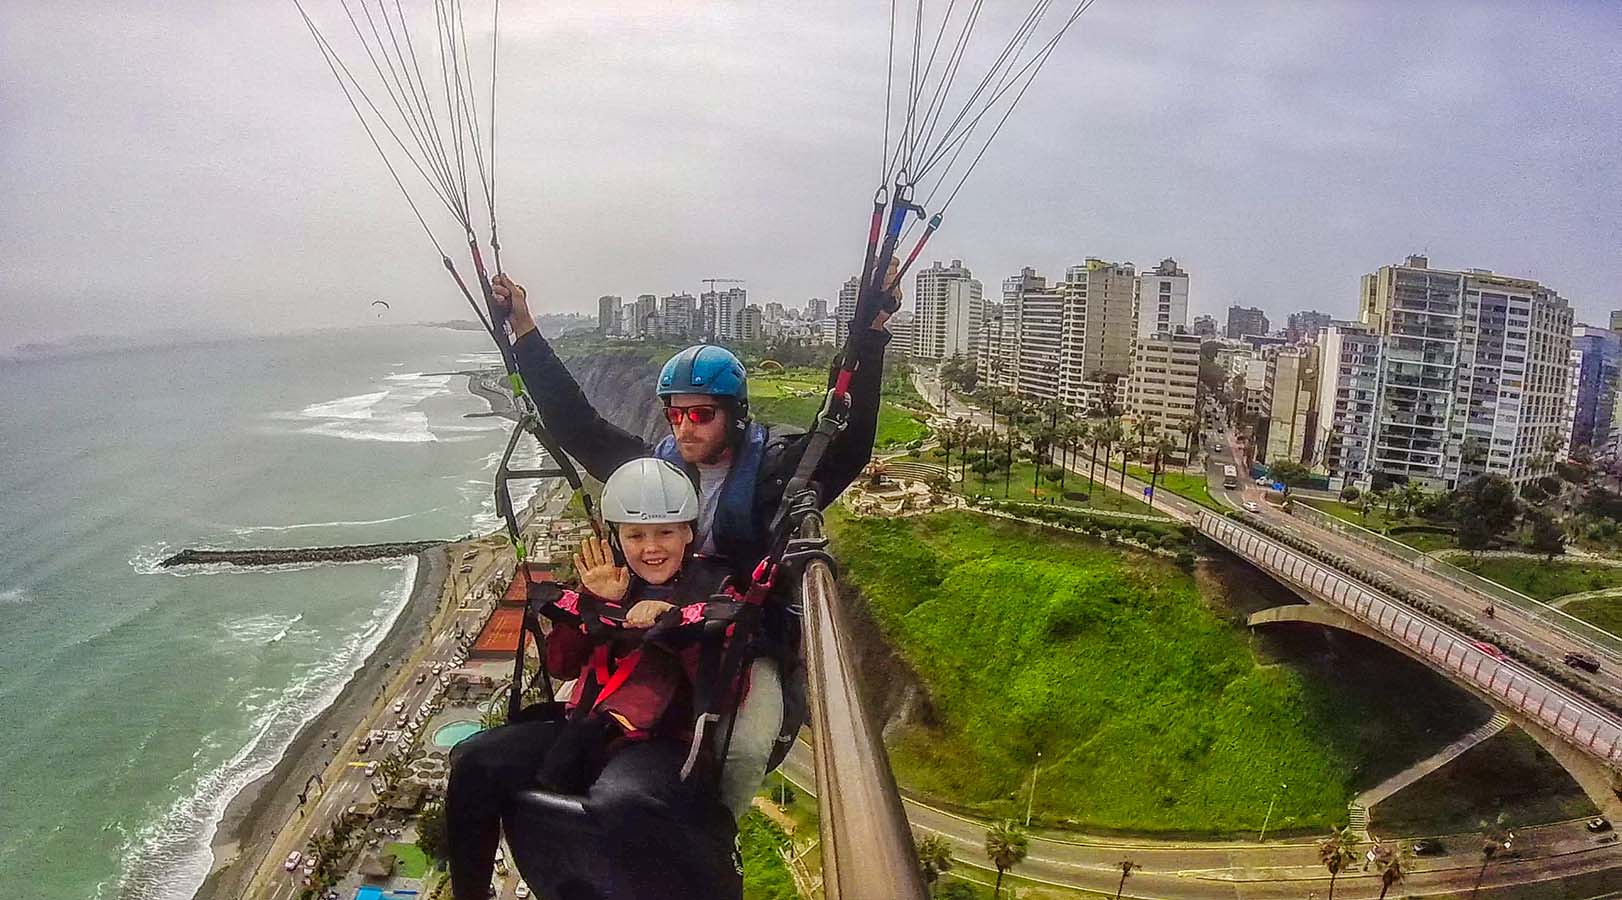 Paragliding in Miraflores